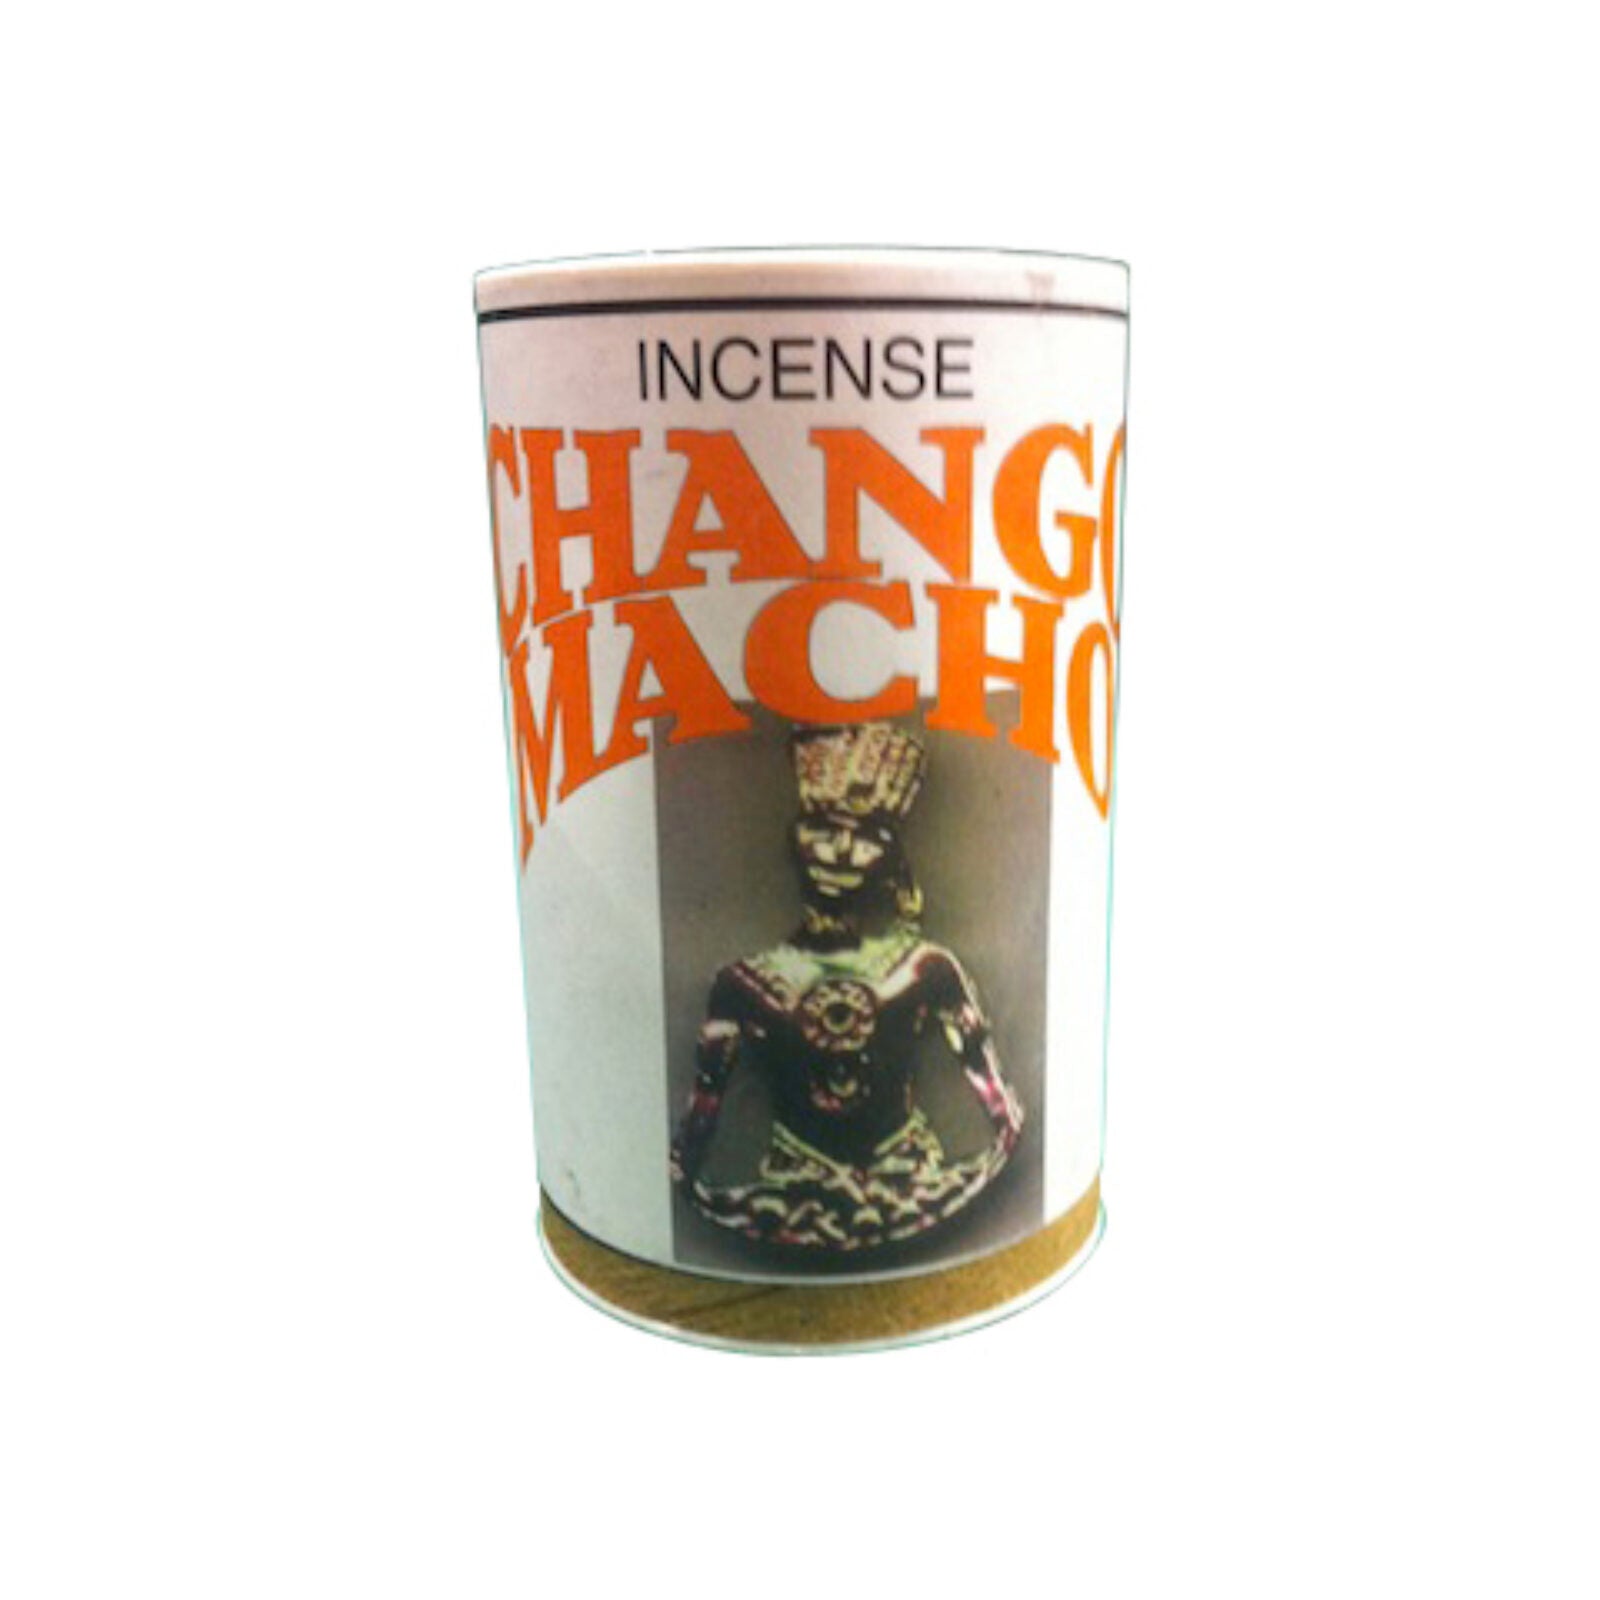 Chango Macho Incense Powder